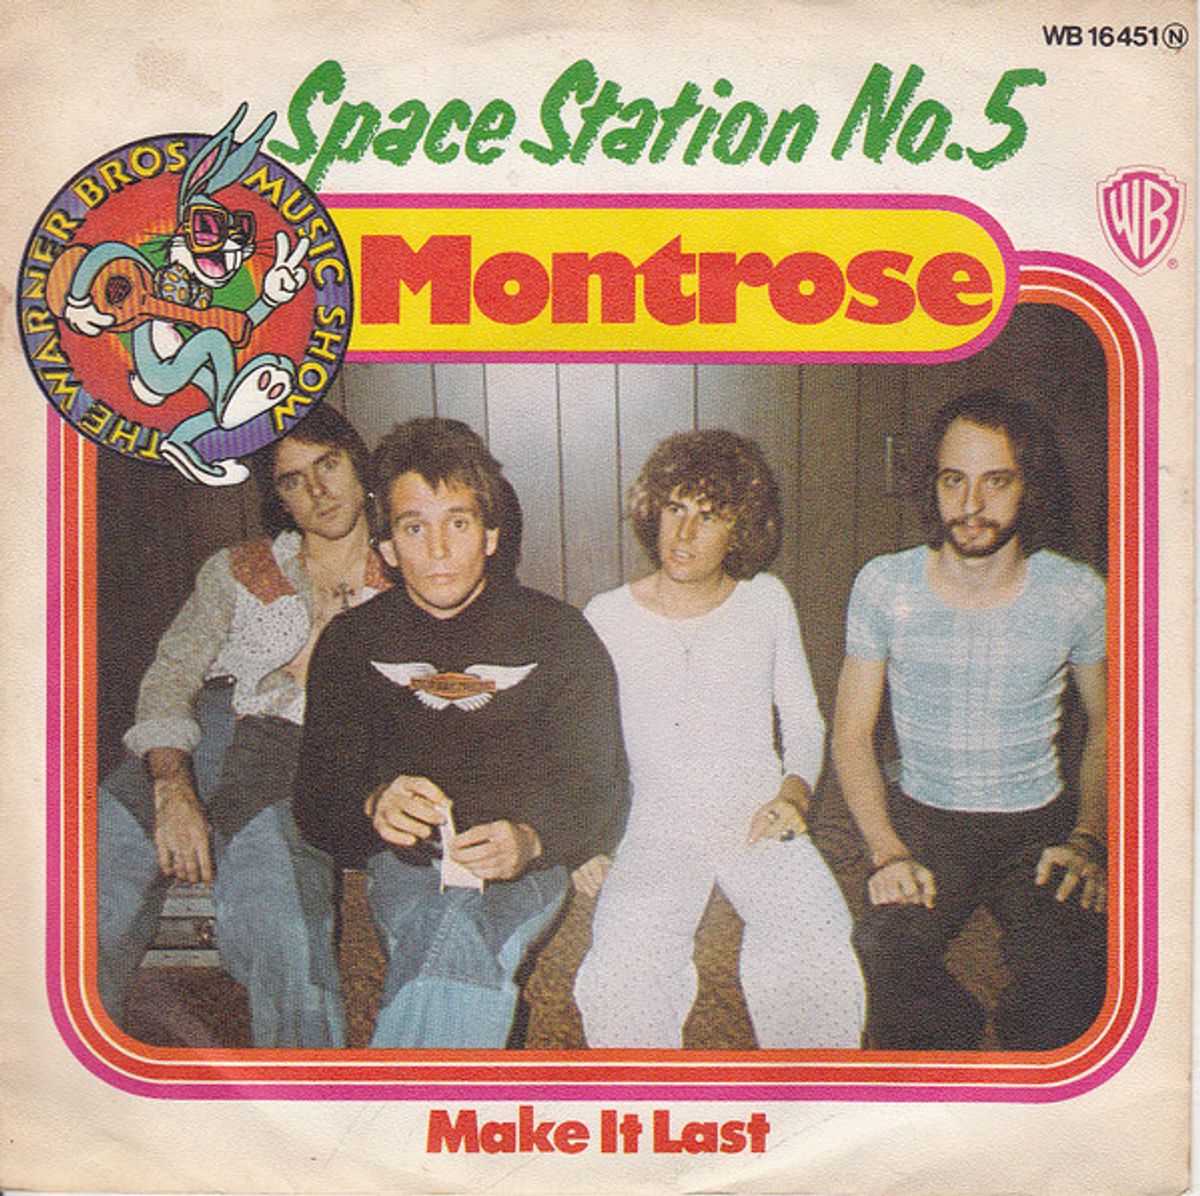 #RockInSpace - Montrose' - Space Station #5 (1973)